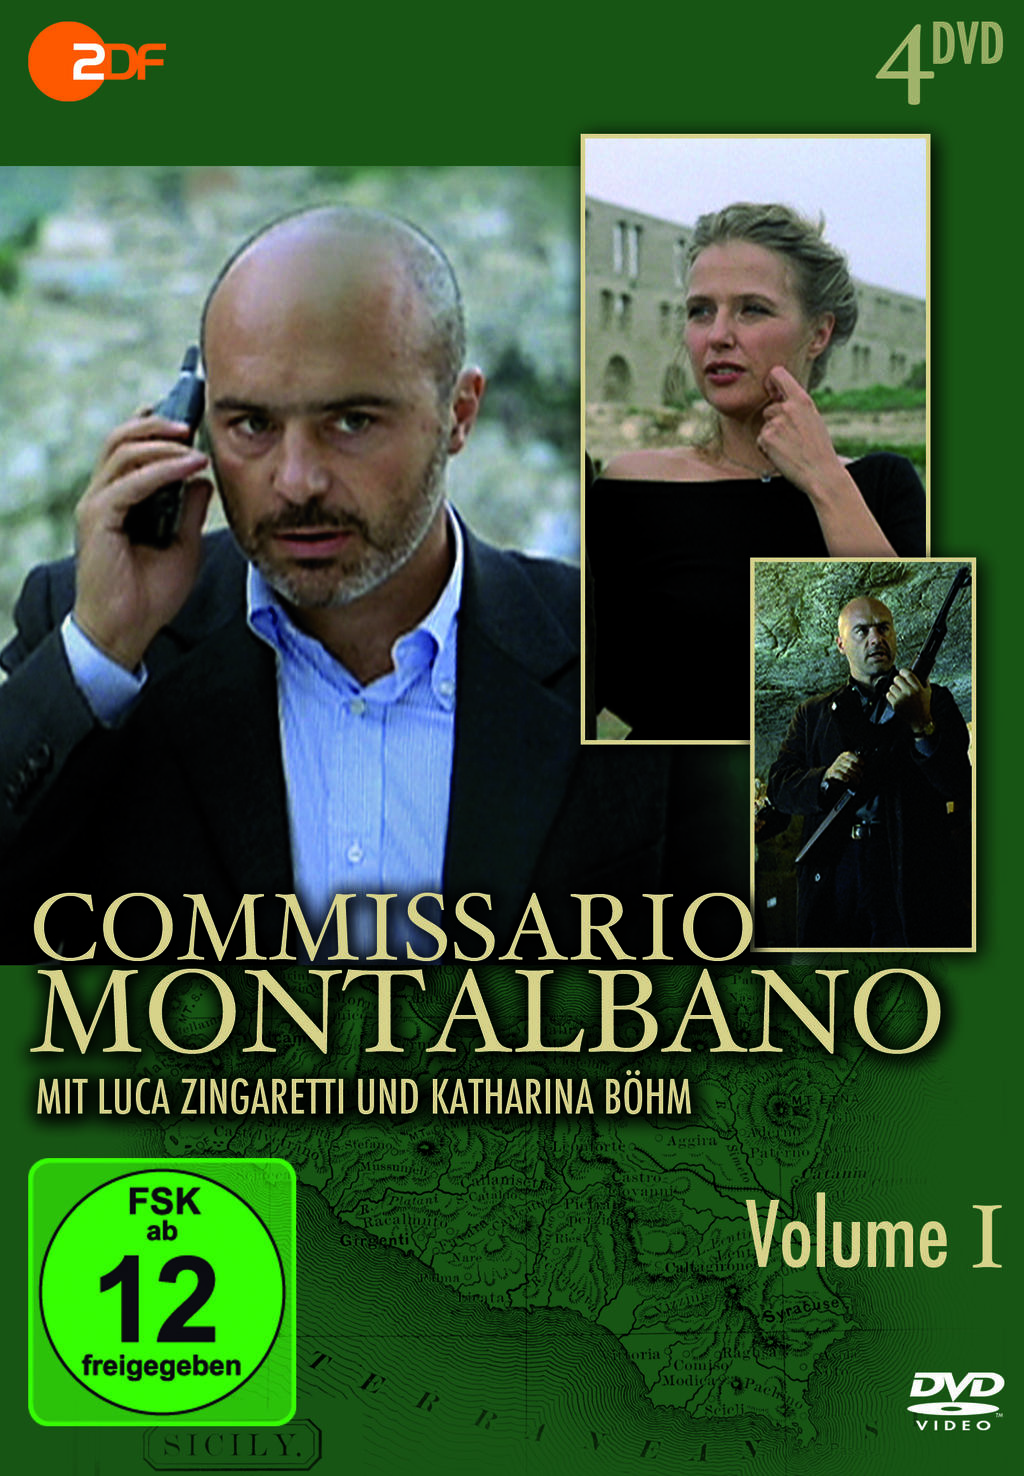 Commissario Montalbano: La gita a Tindari | Season 3 | Episode 1